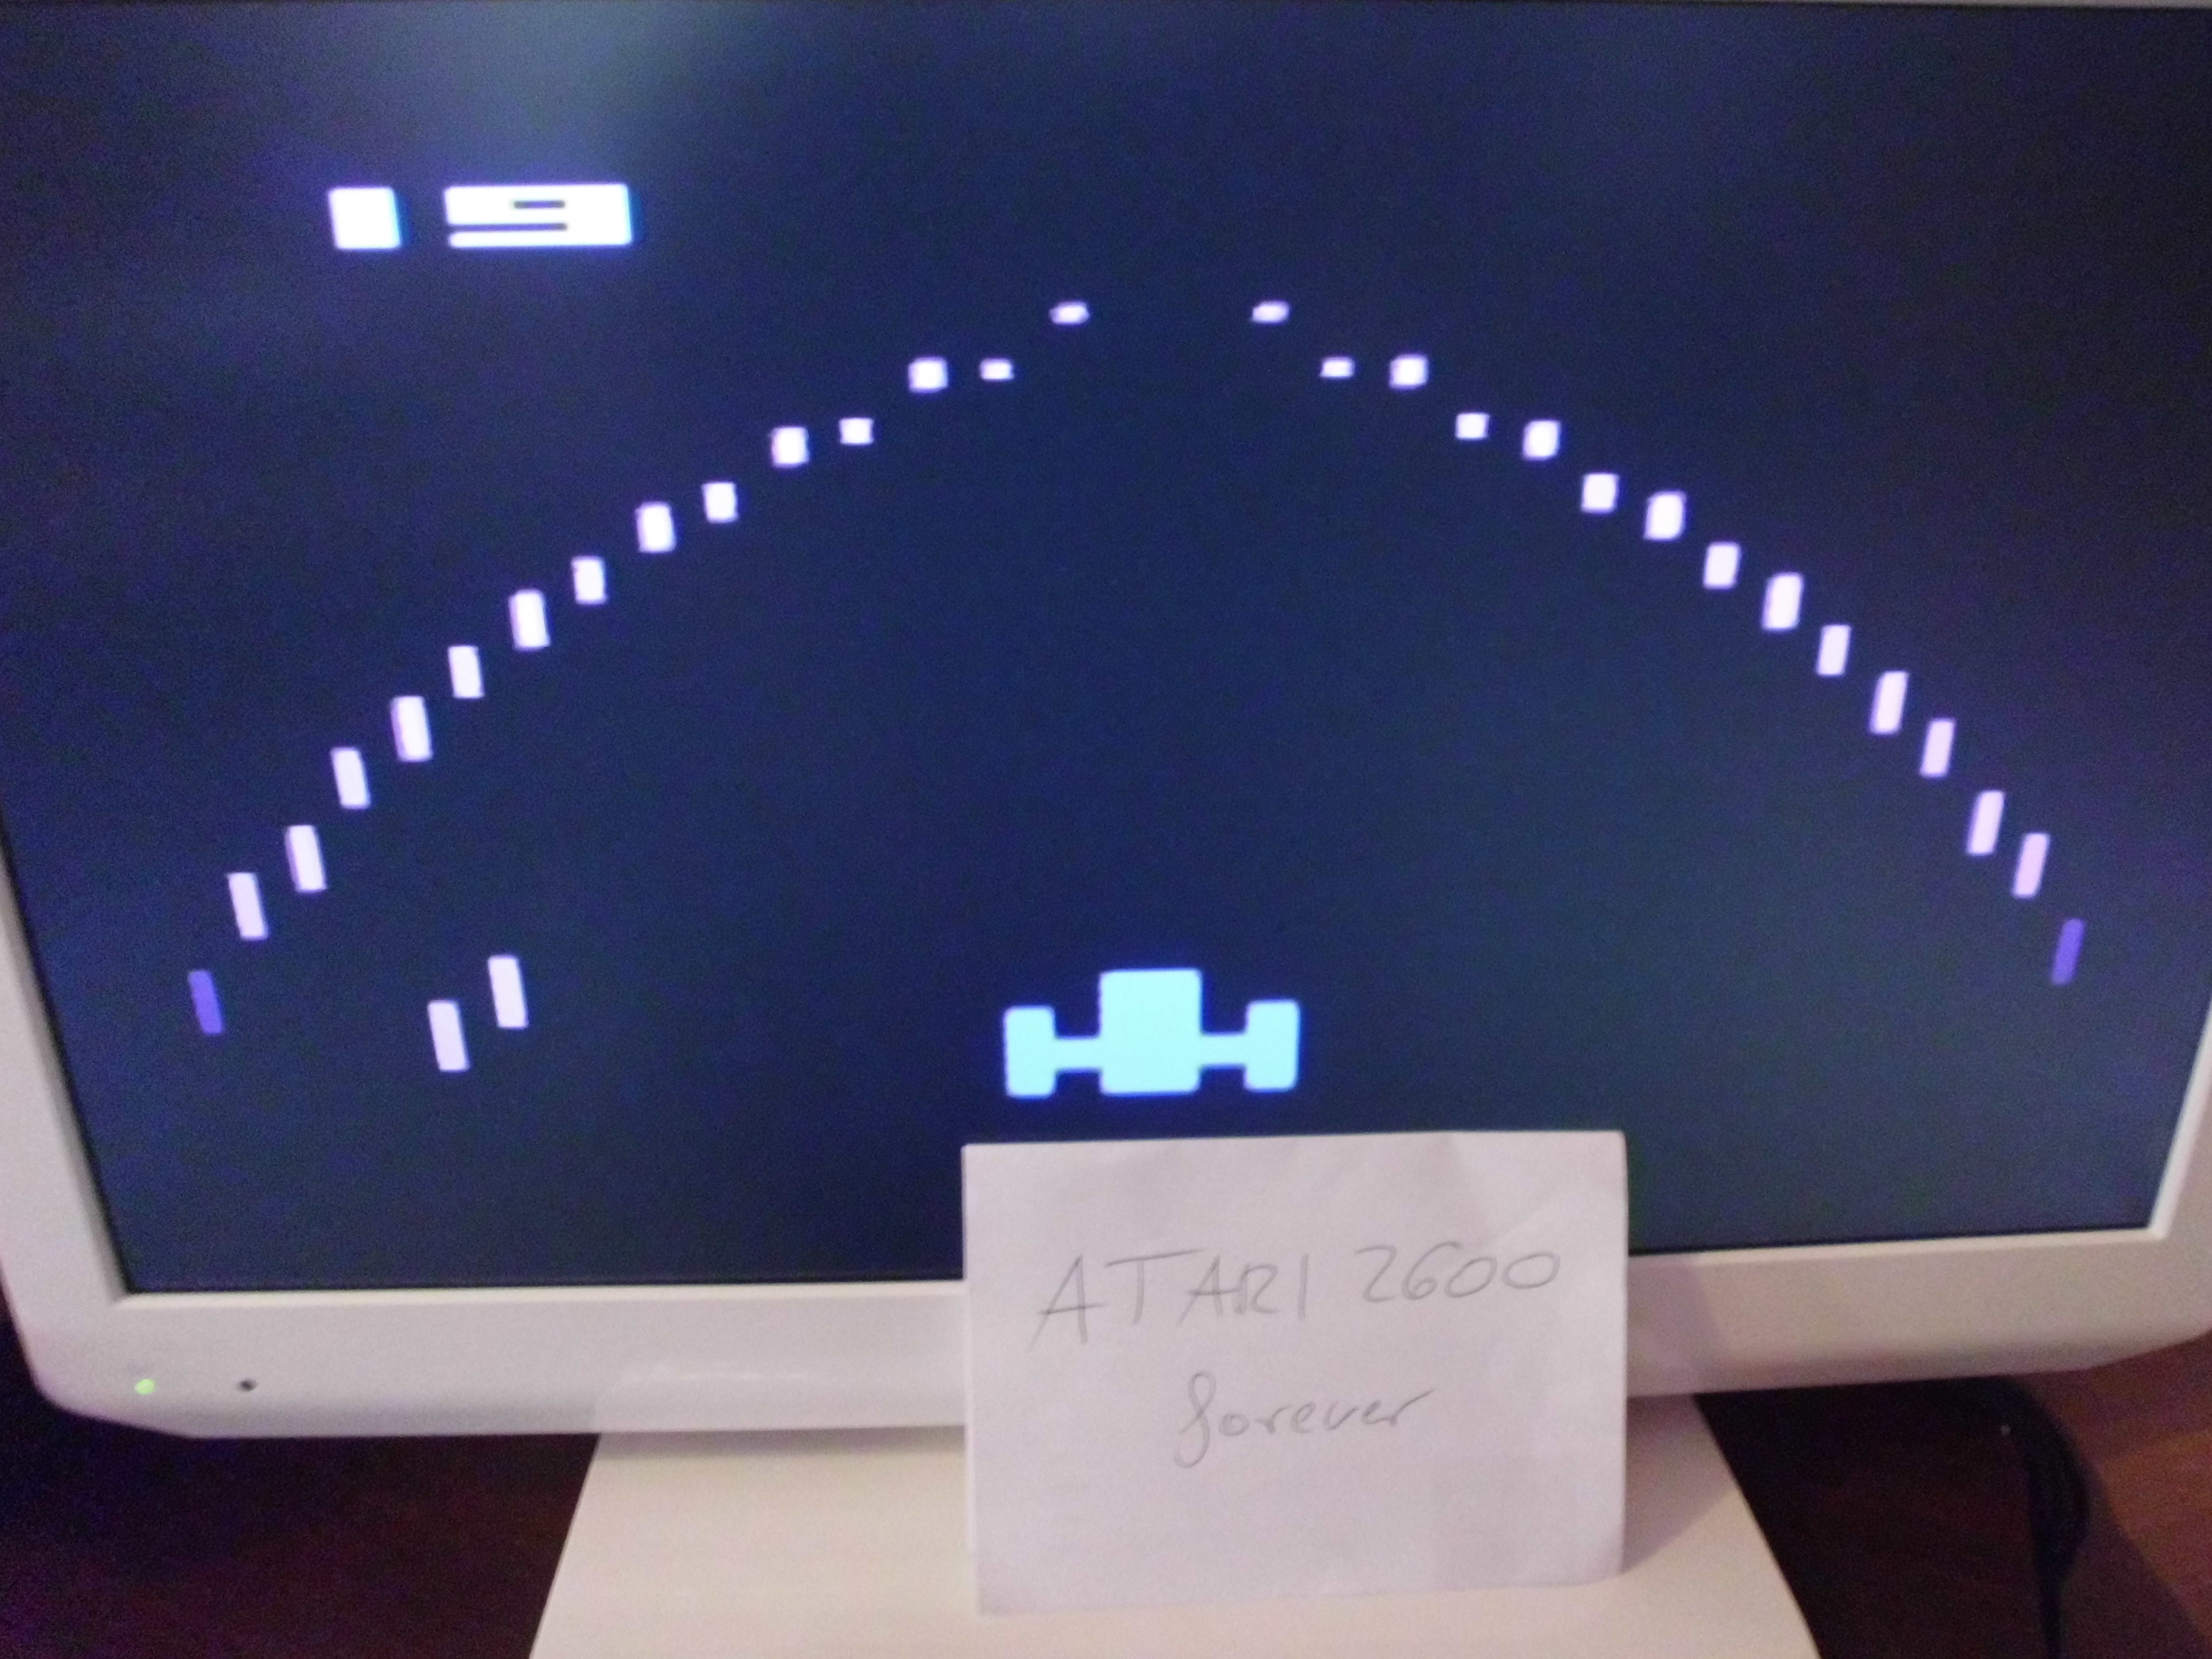 atari2600forever: Atari Anthology: Night Driver [Game 1B] (Playstation 2) 19 points on 2017-07-21 03:06:59